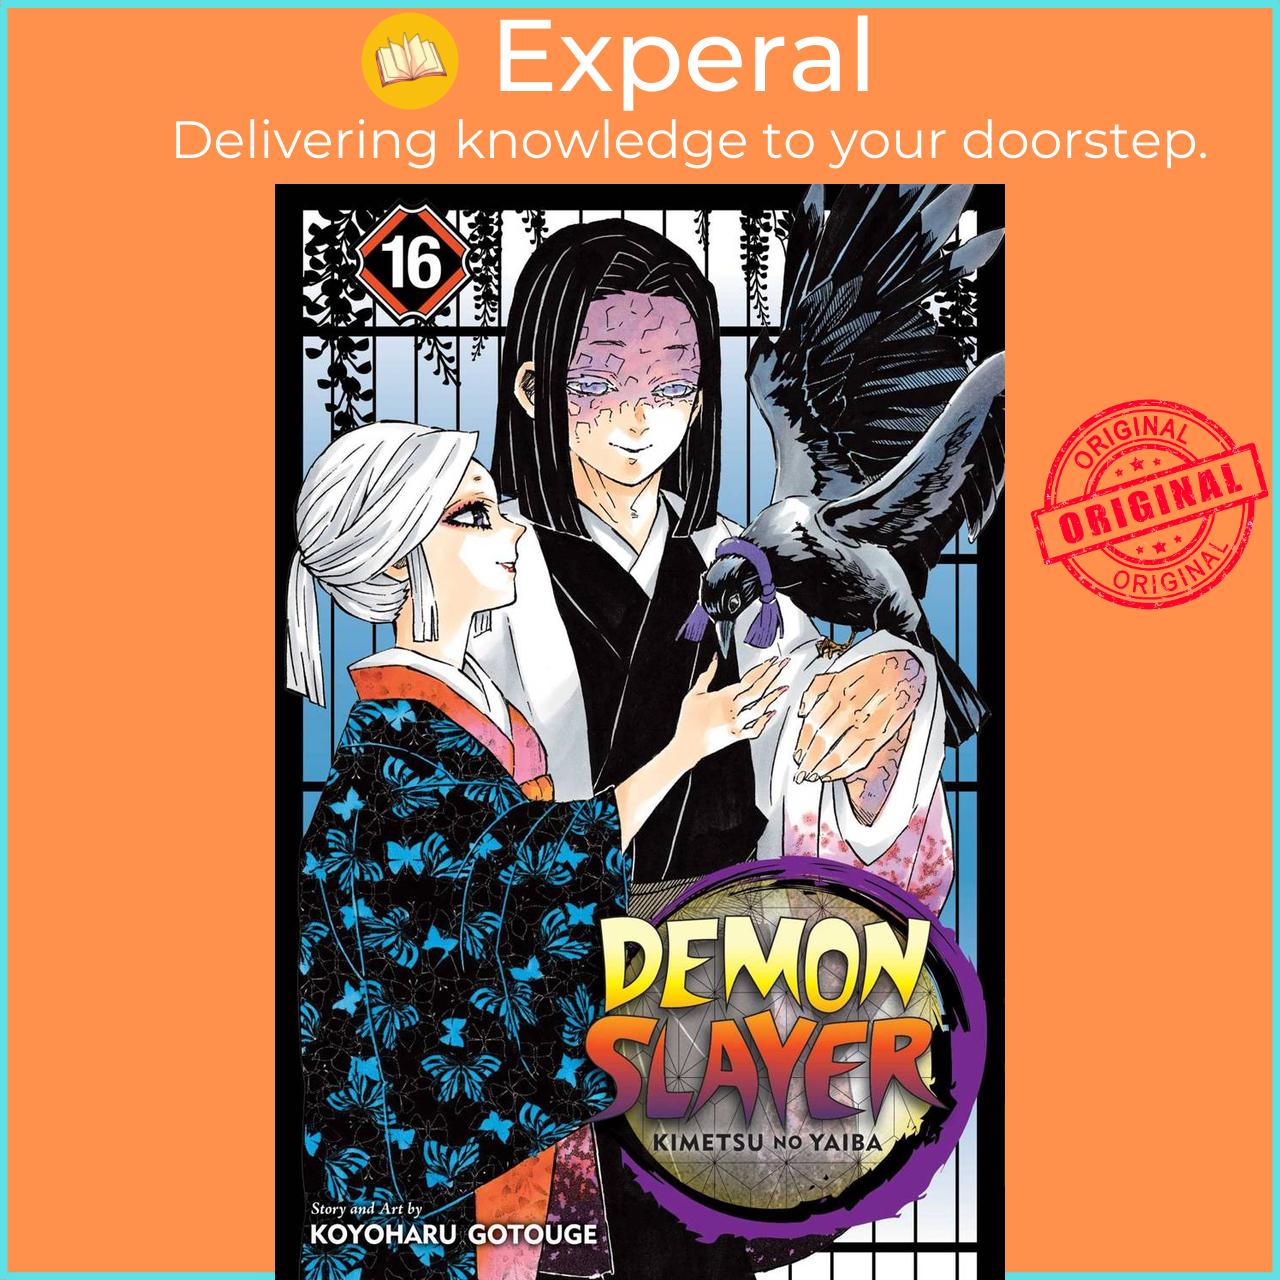 Sách - Demon Slayer: Kimetsu no Yaiba, Vol. 16 by Koyoharu Gotouge (US edition, paperback)